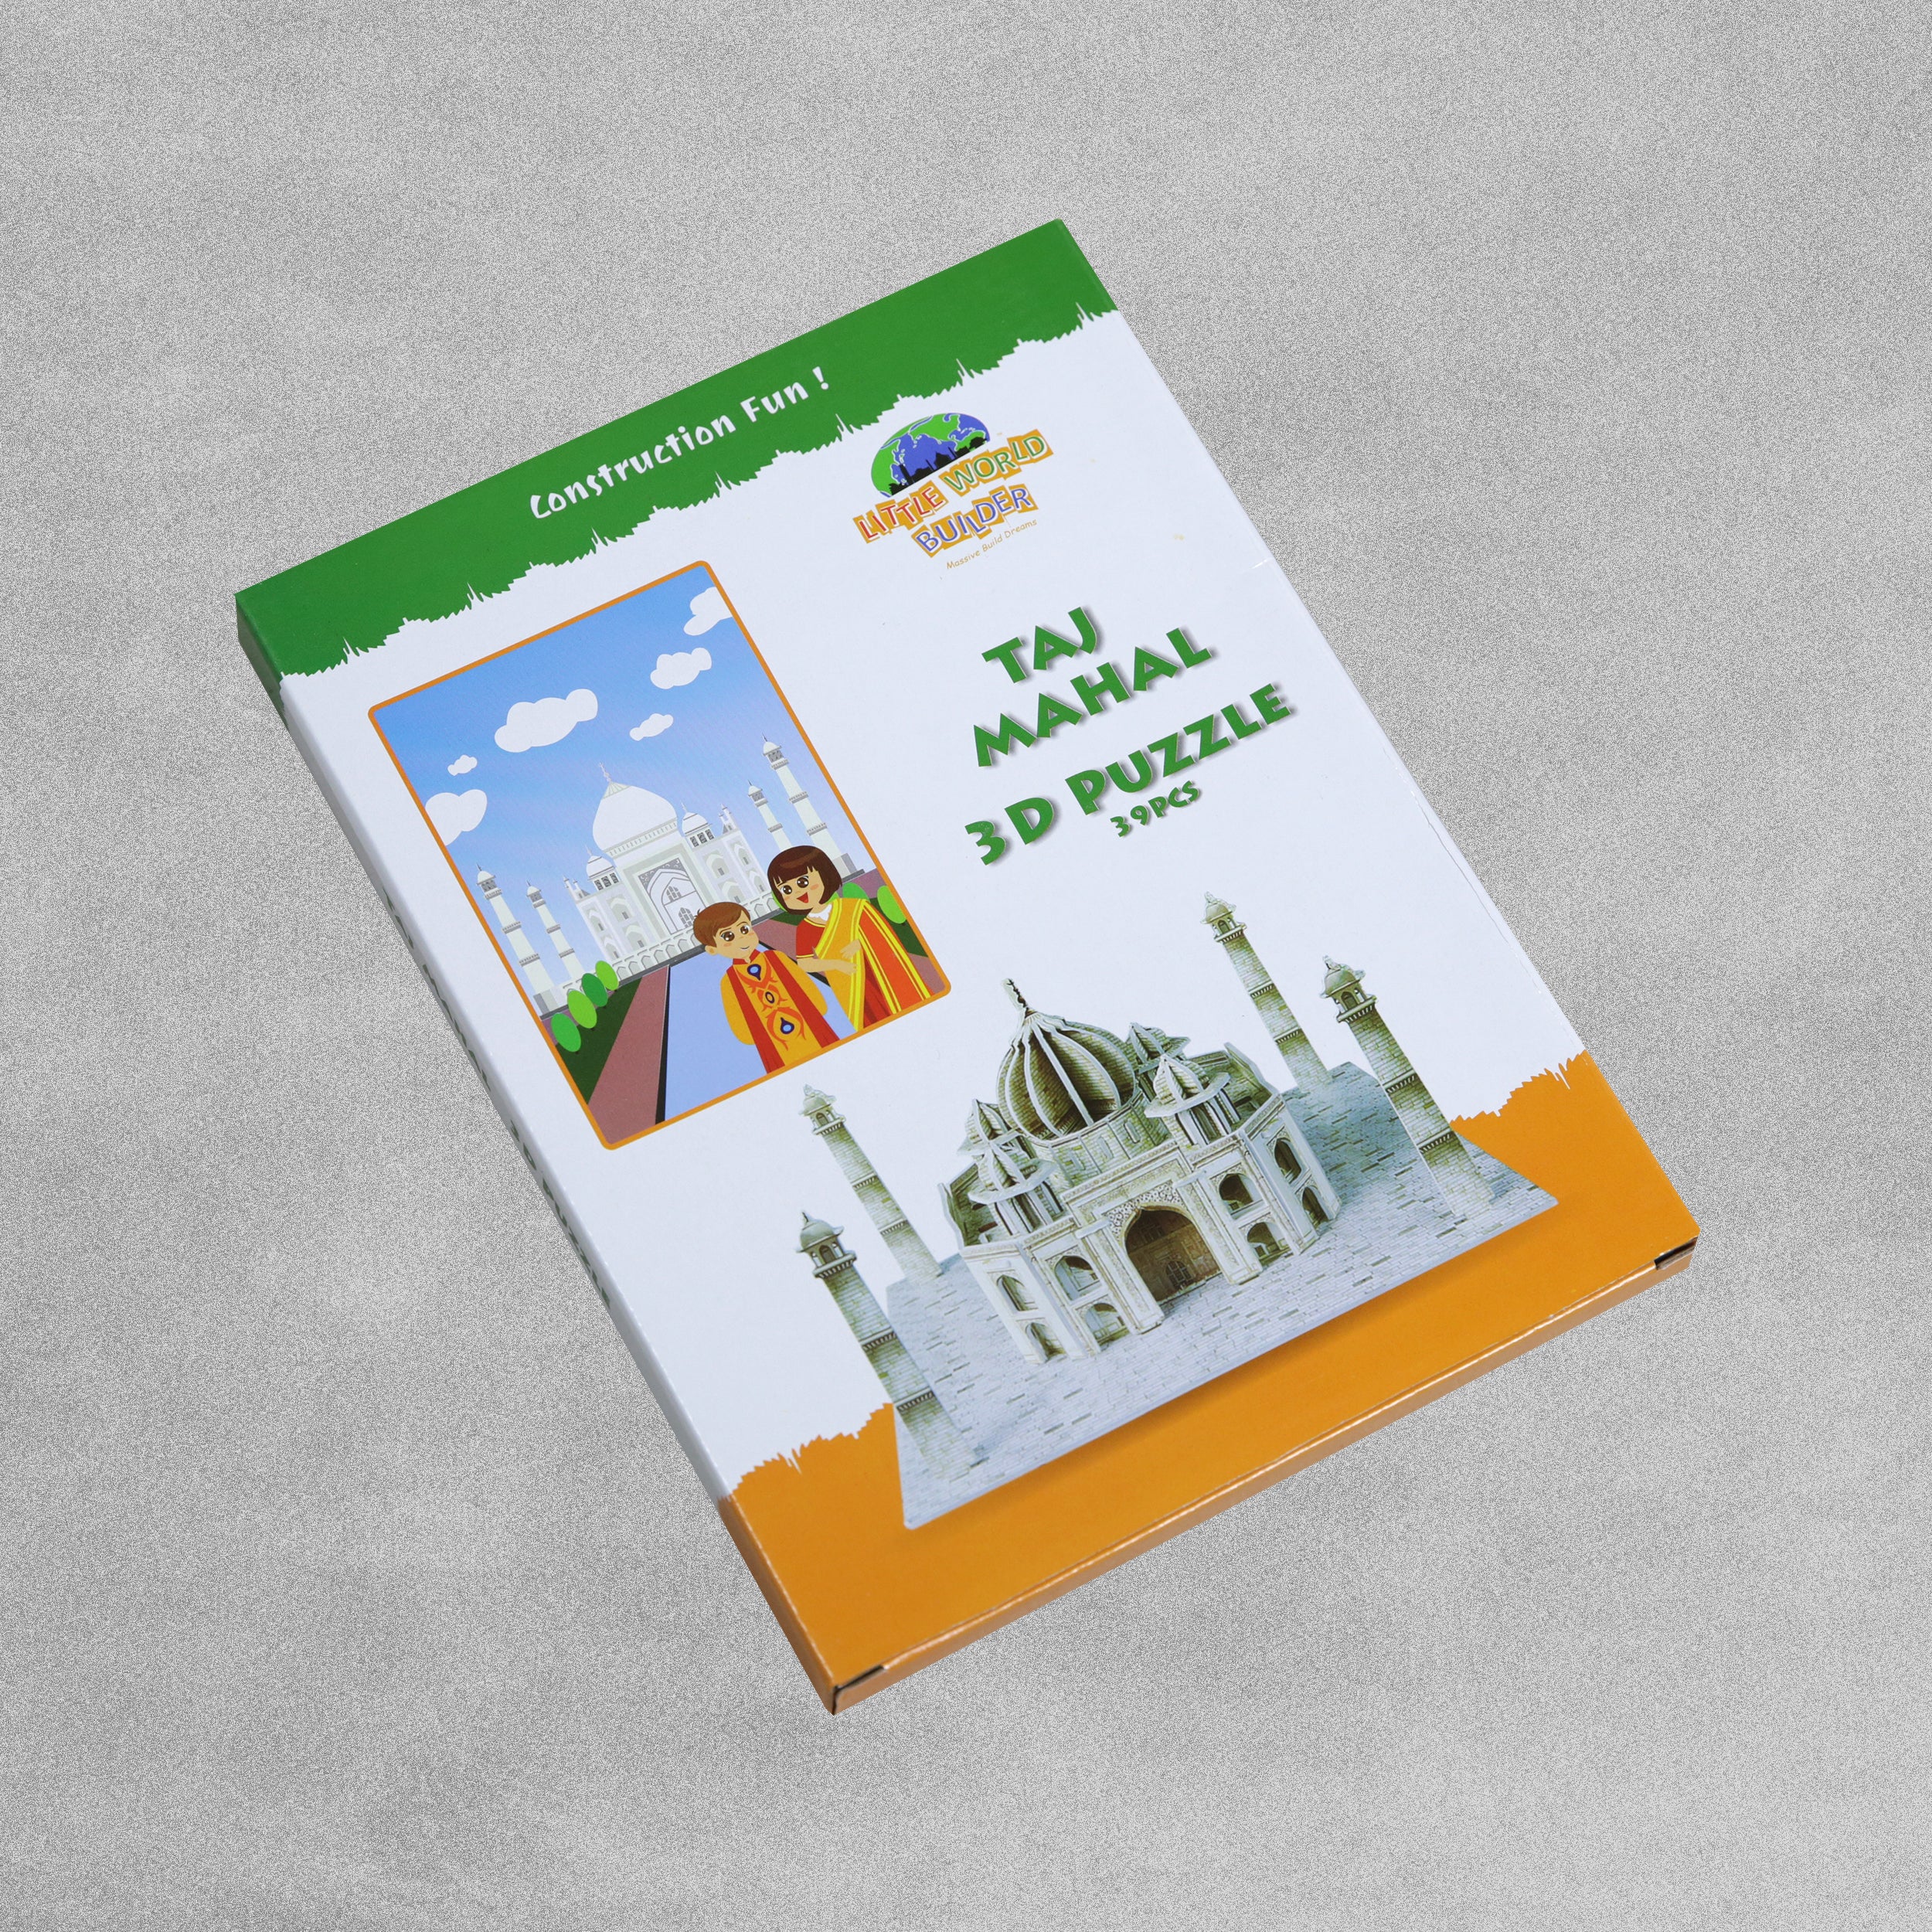 Little World Builder 3D puzzle of The Taj Mahal